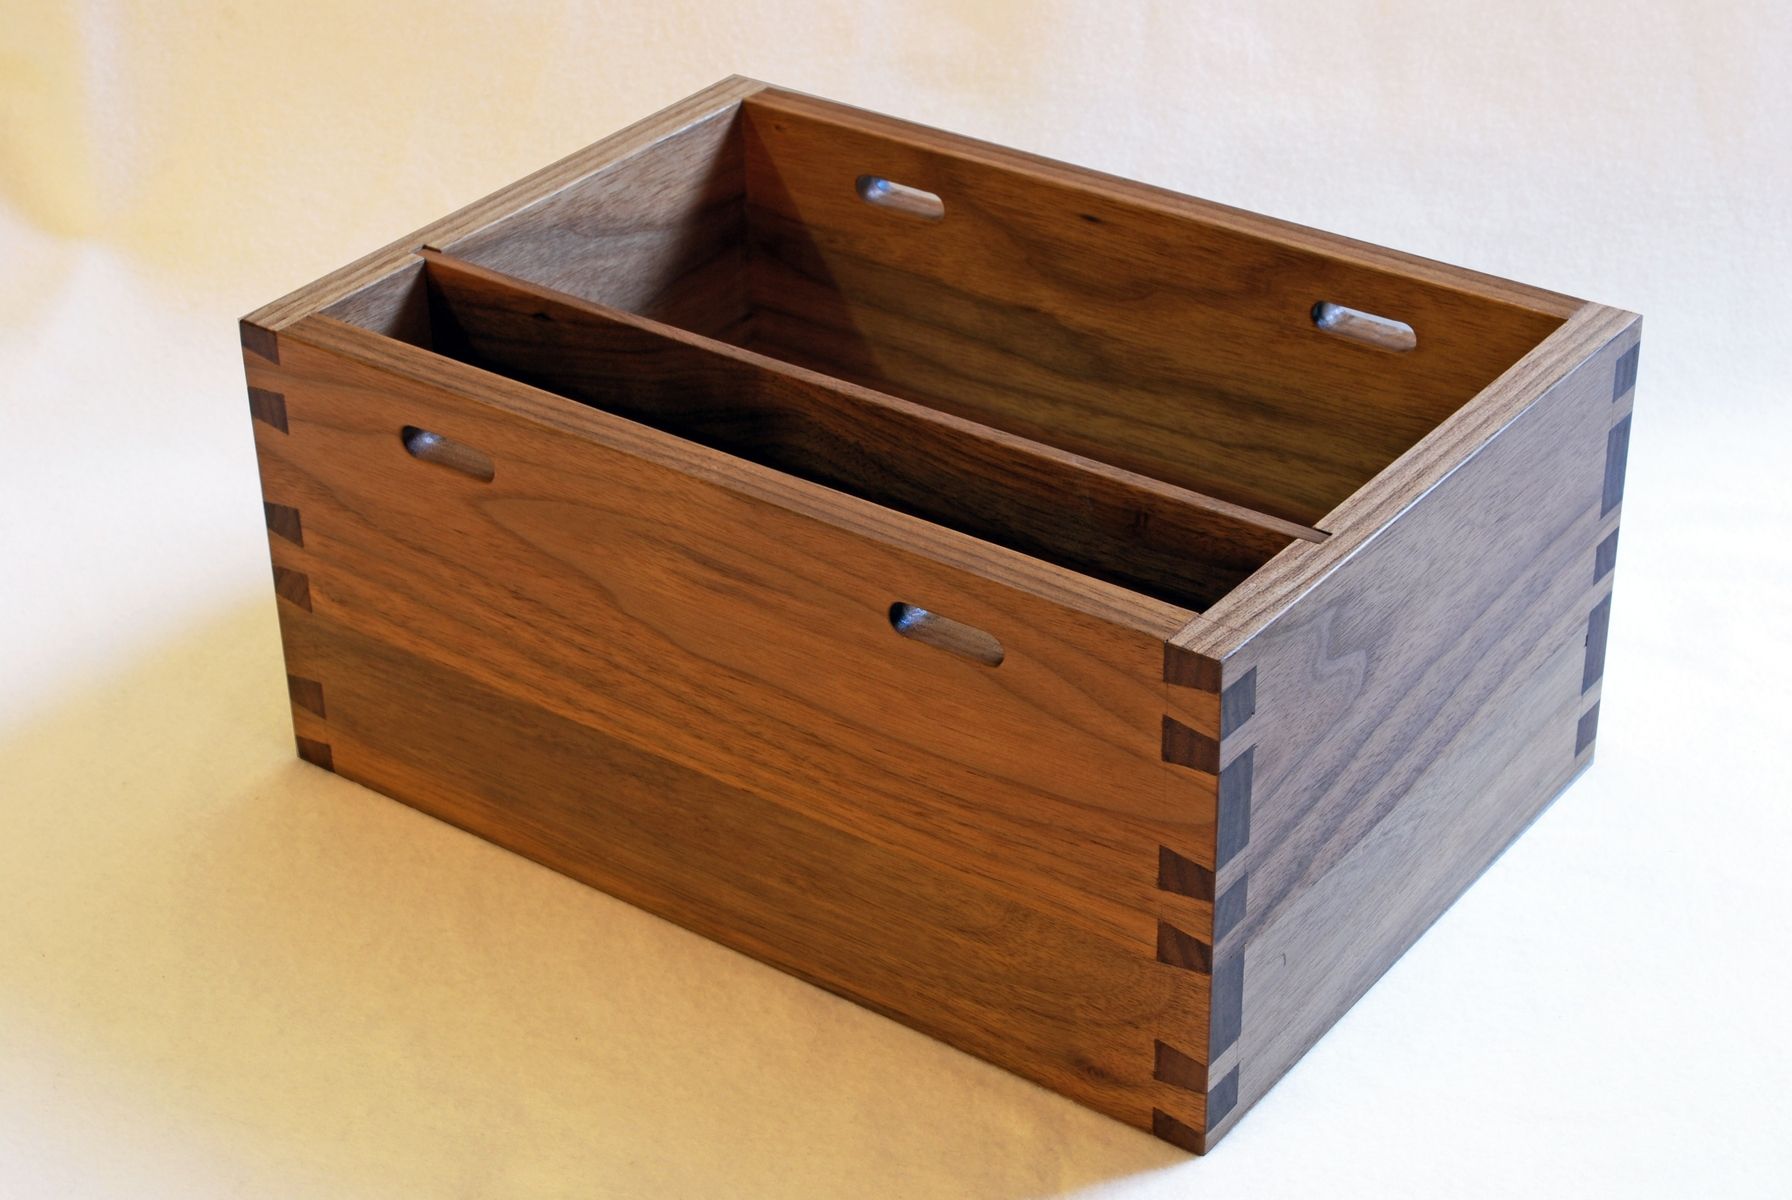 Handmade Storage Box/Caddy by Clark Wood Creations | CustomMade.com